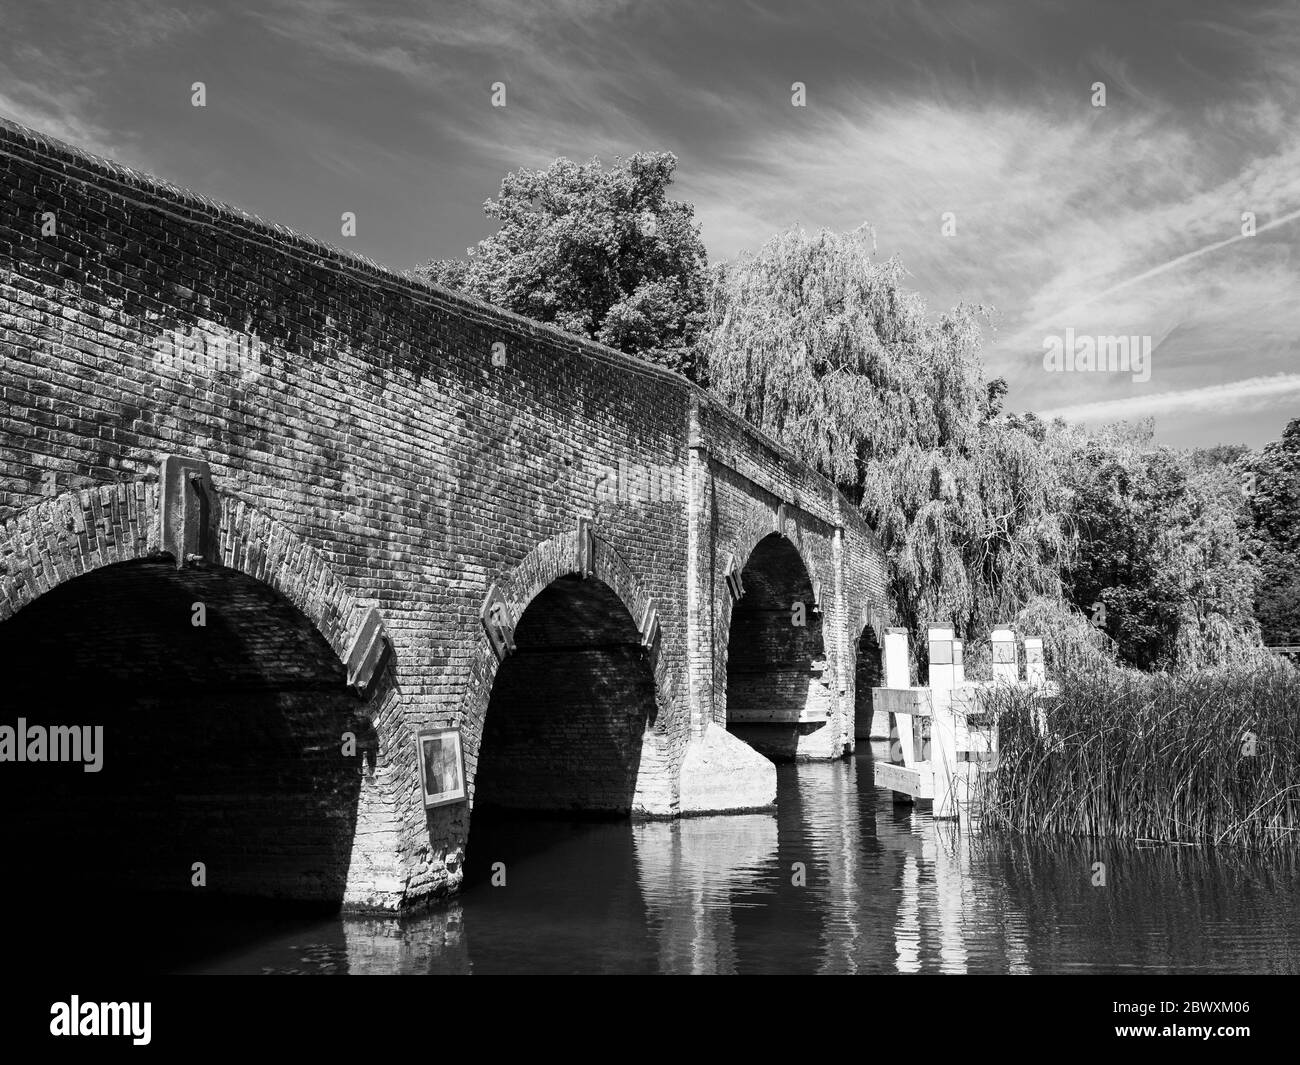 Paysage idyllique noir et blanc, Sonning Bridge, Sonning, Reading, Berkshire, Angleterre, Royaume-Uni, GB. Banque D'Images